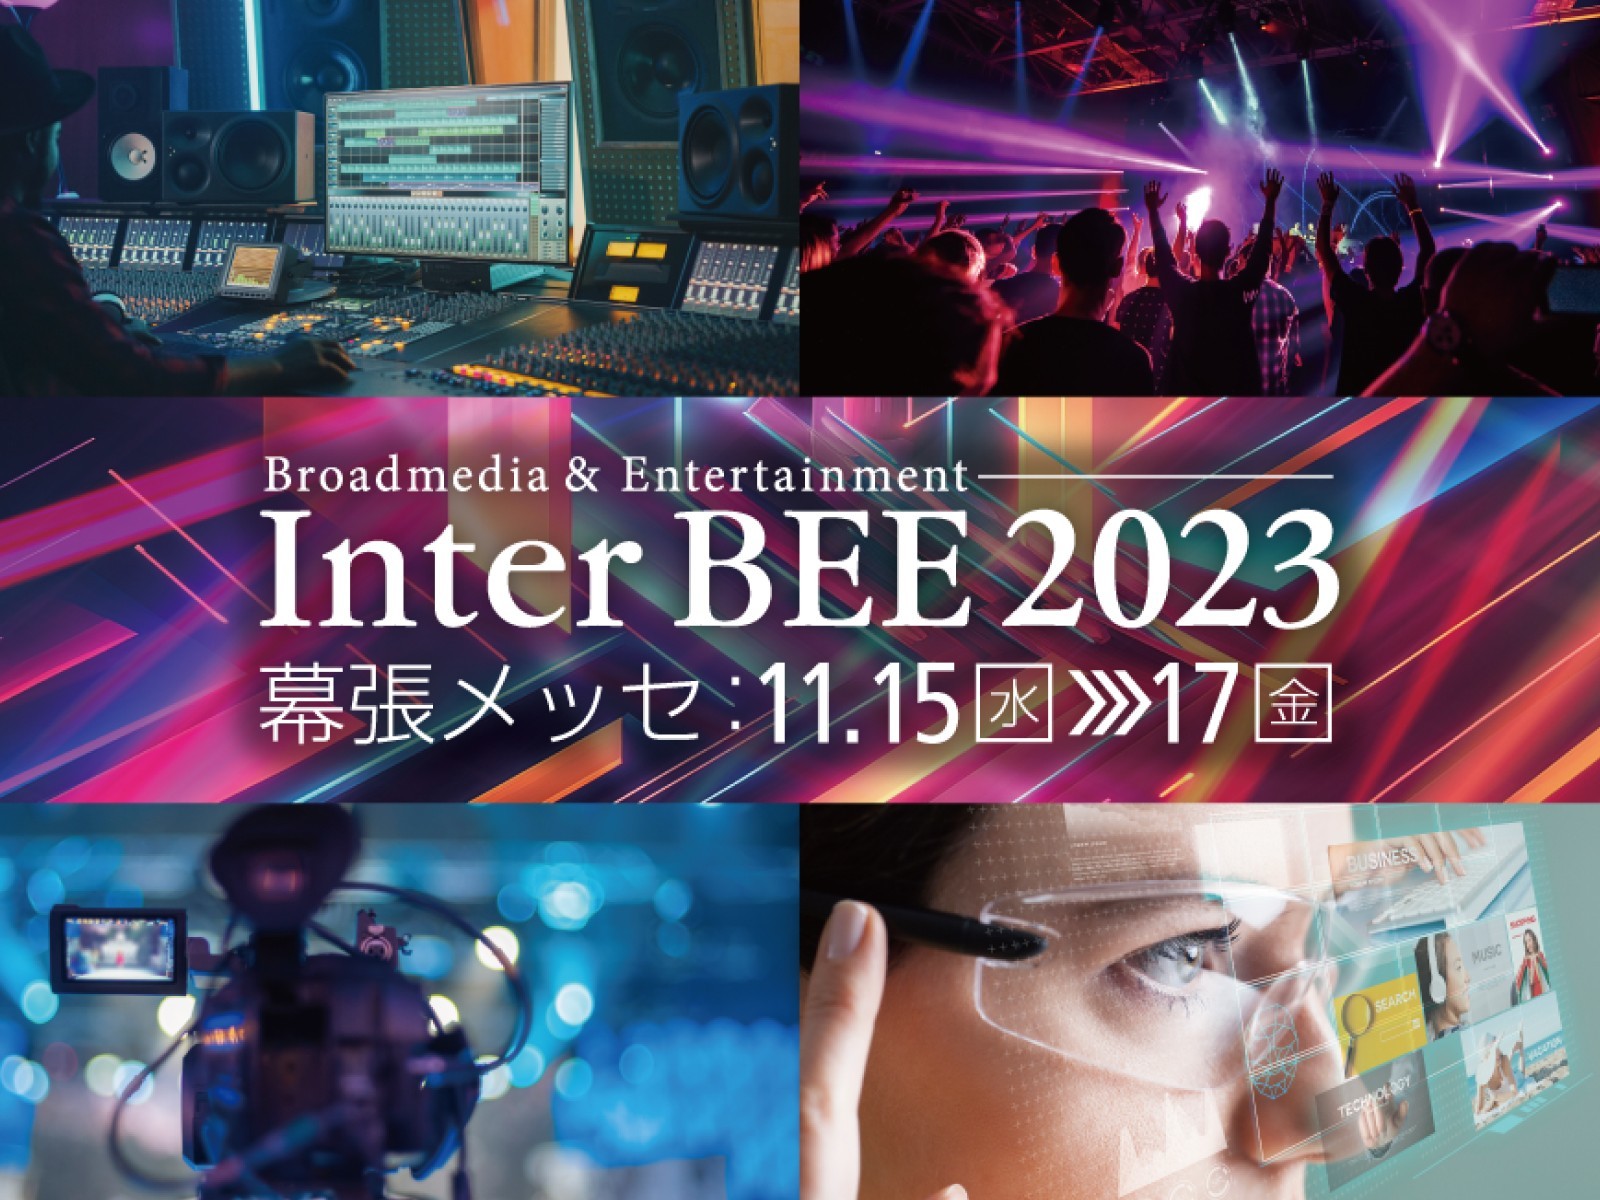 InterBEE 2023 に出展します。